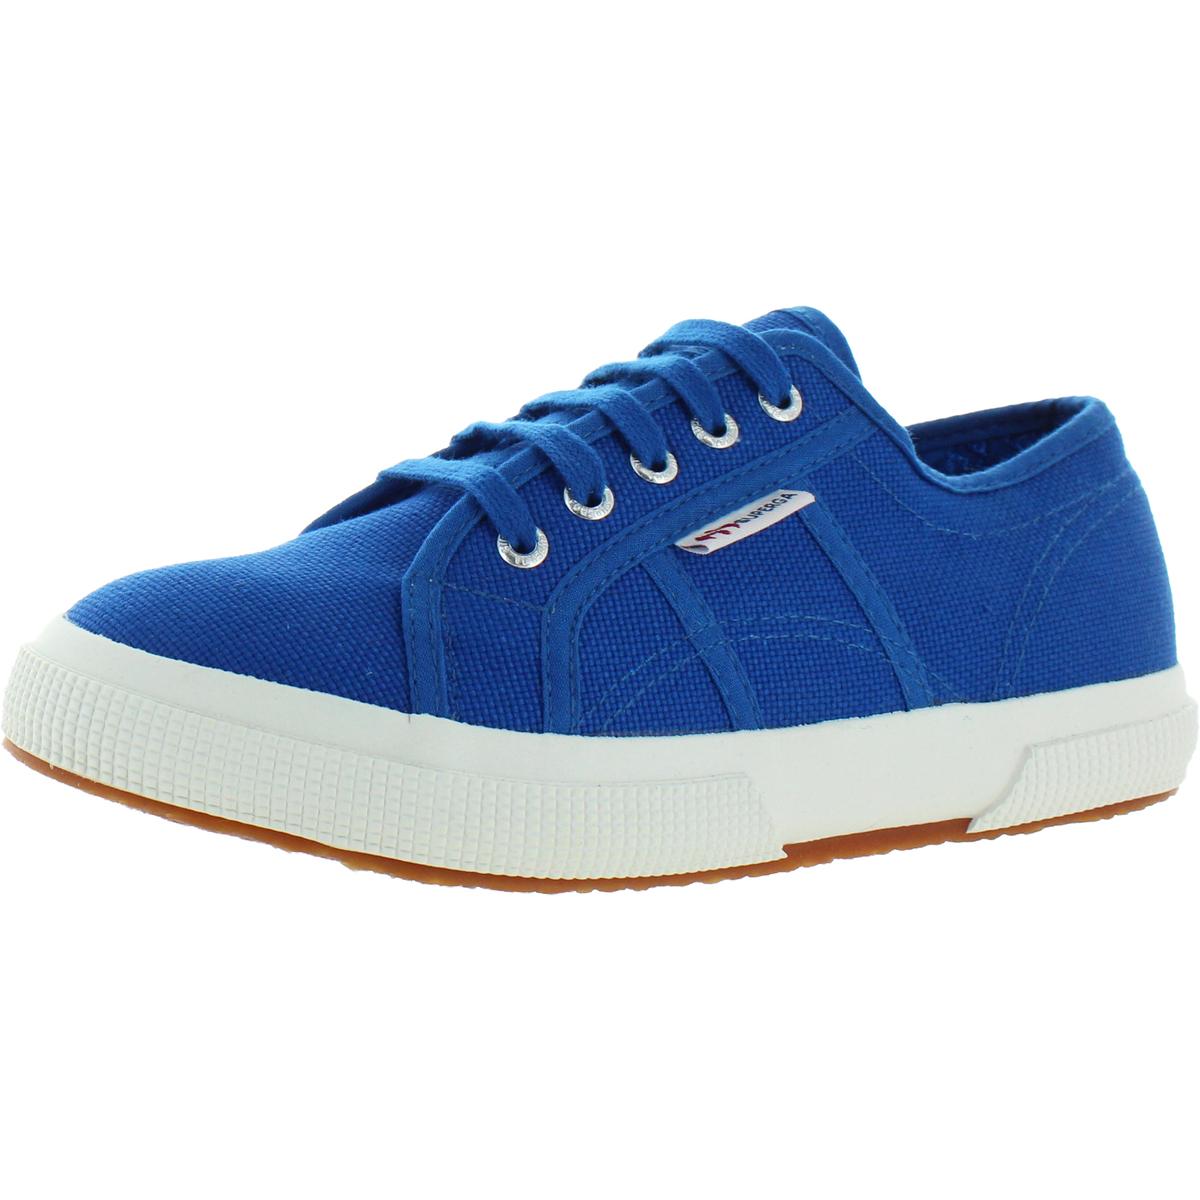 Superga Boys 2750 Classic Blue Sneakers Shoes 6.5 Medium (D) Toddler ...